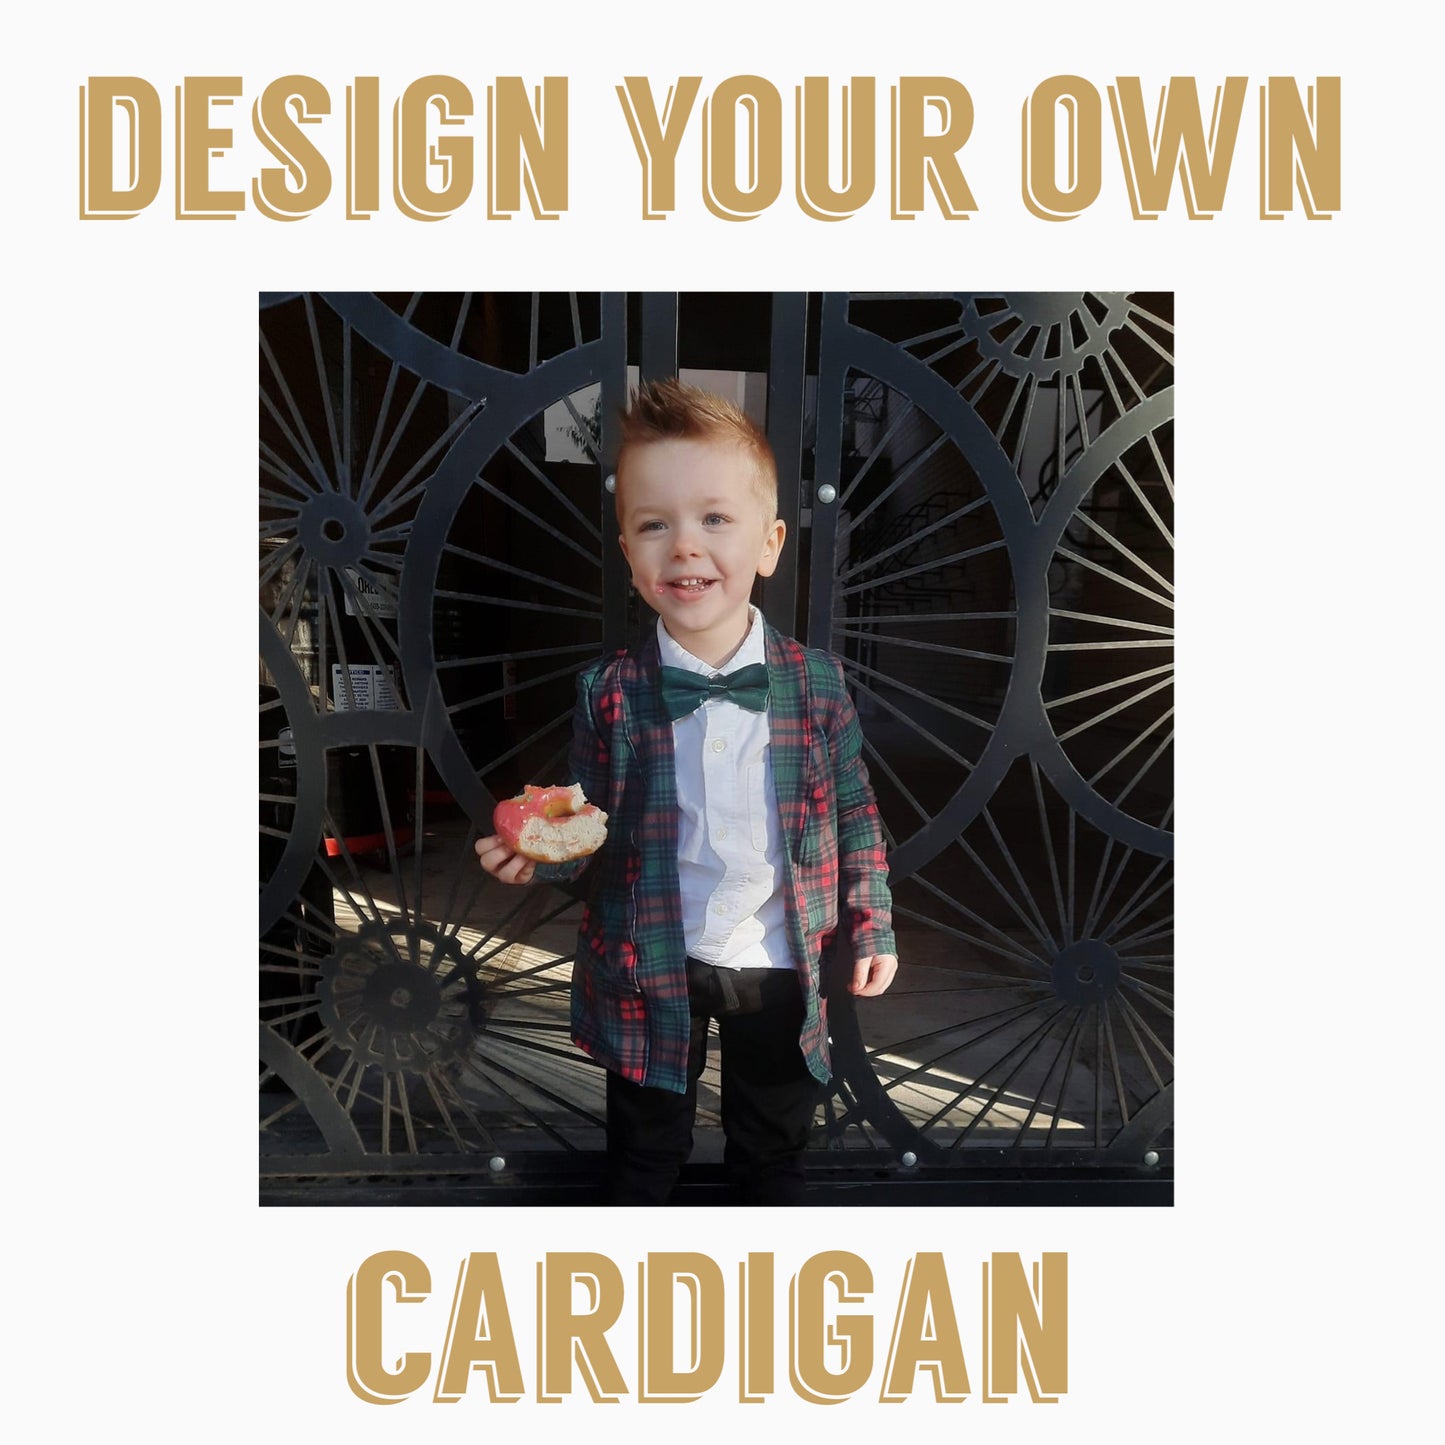 Design Your Own | Cardigan